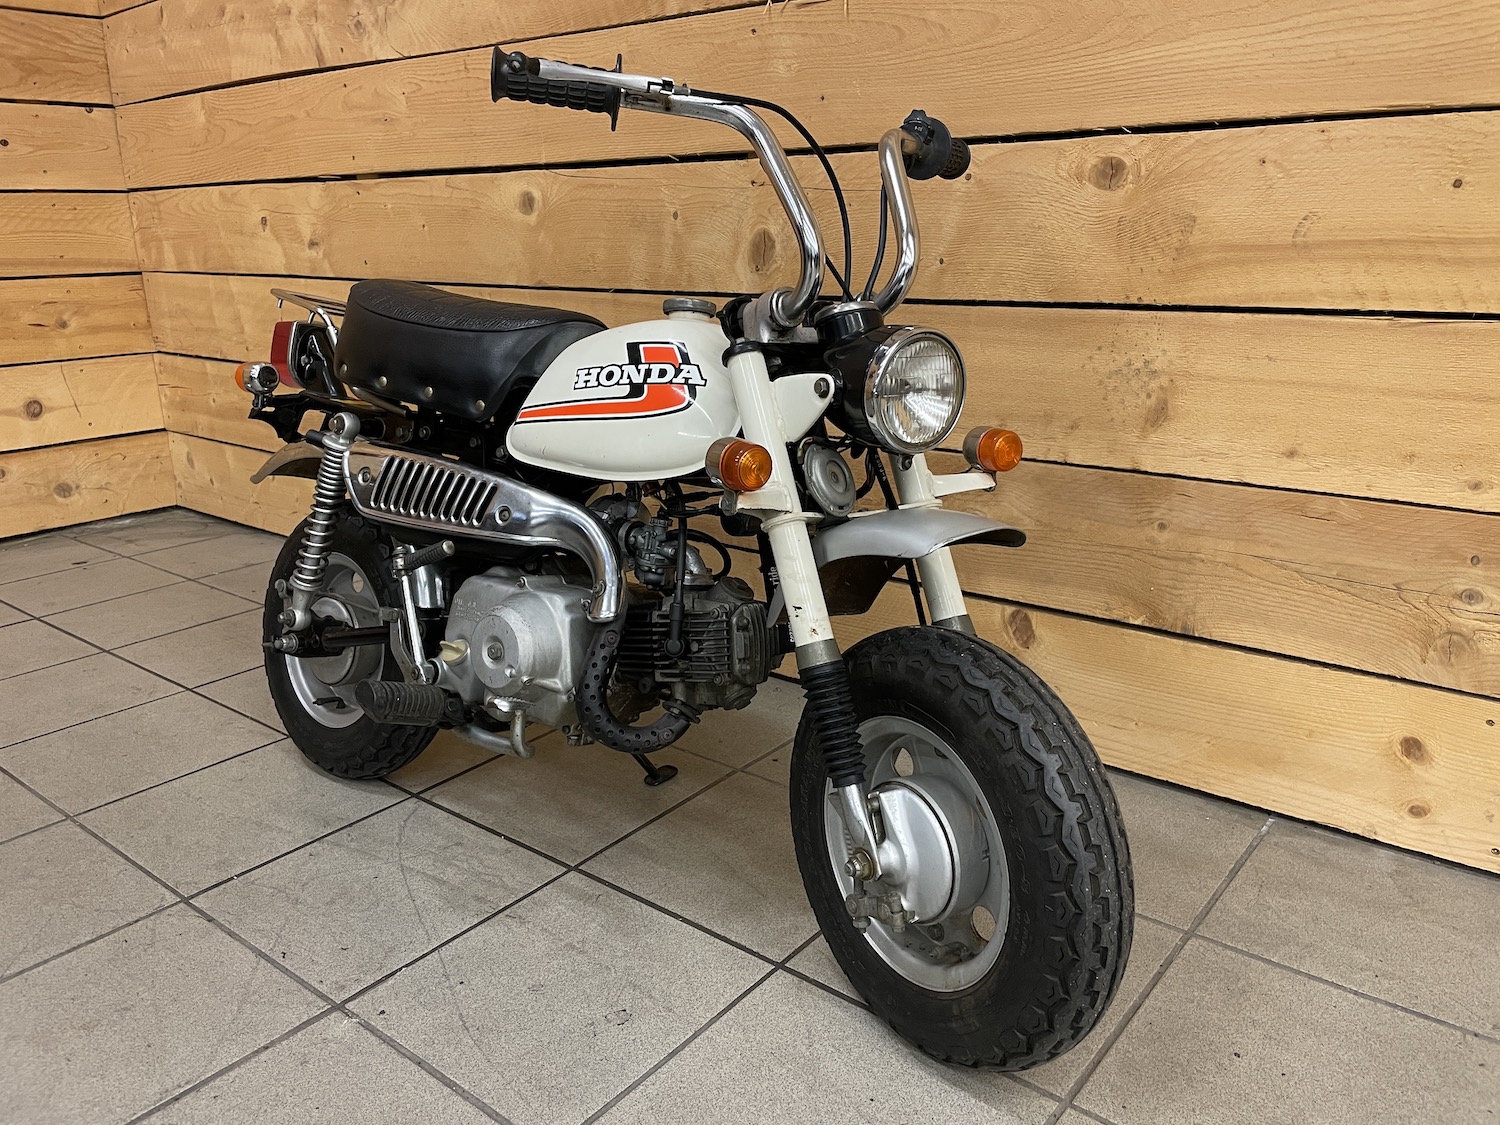 Honda_Monkey_Z50J_cezanne_classic_motorcycles_1-123.jpg